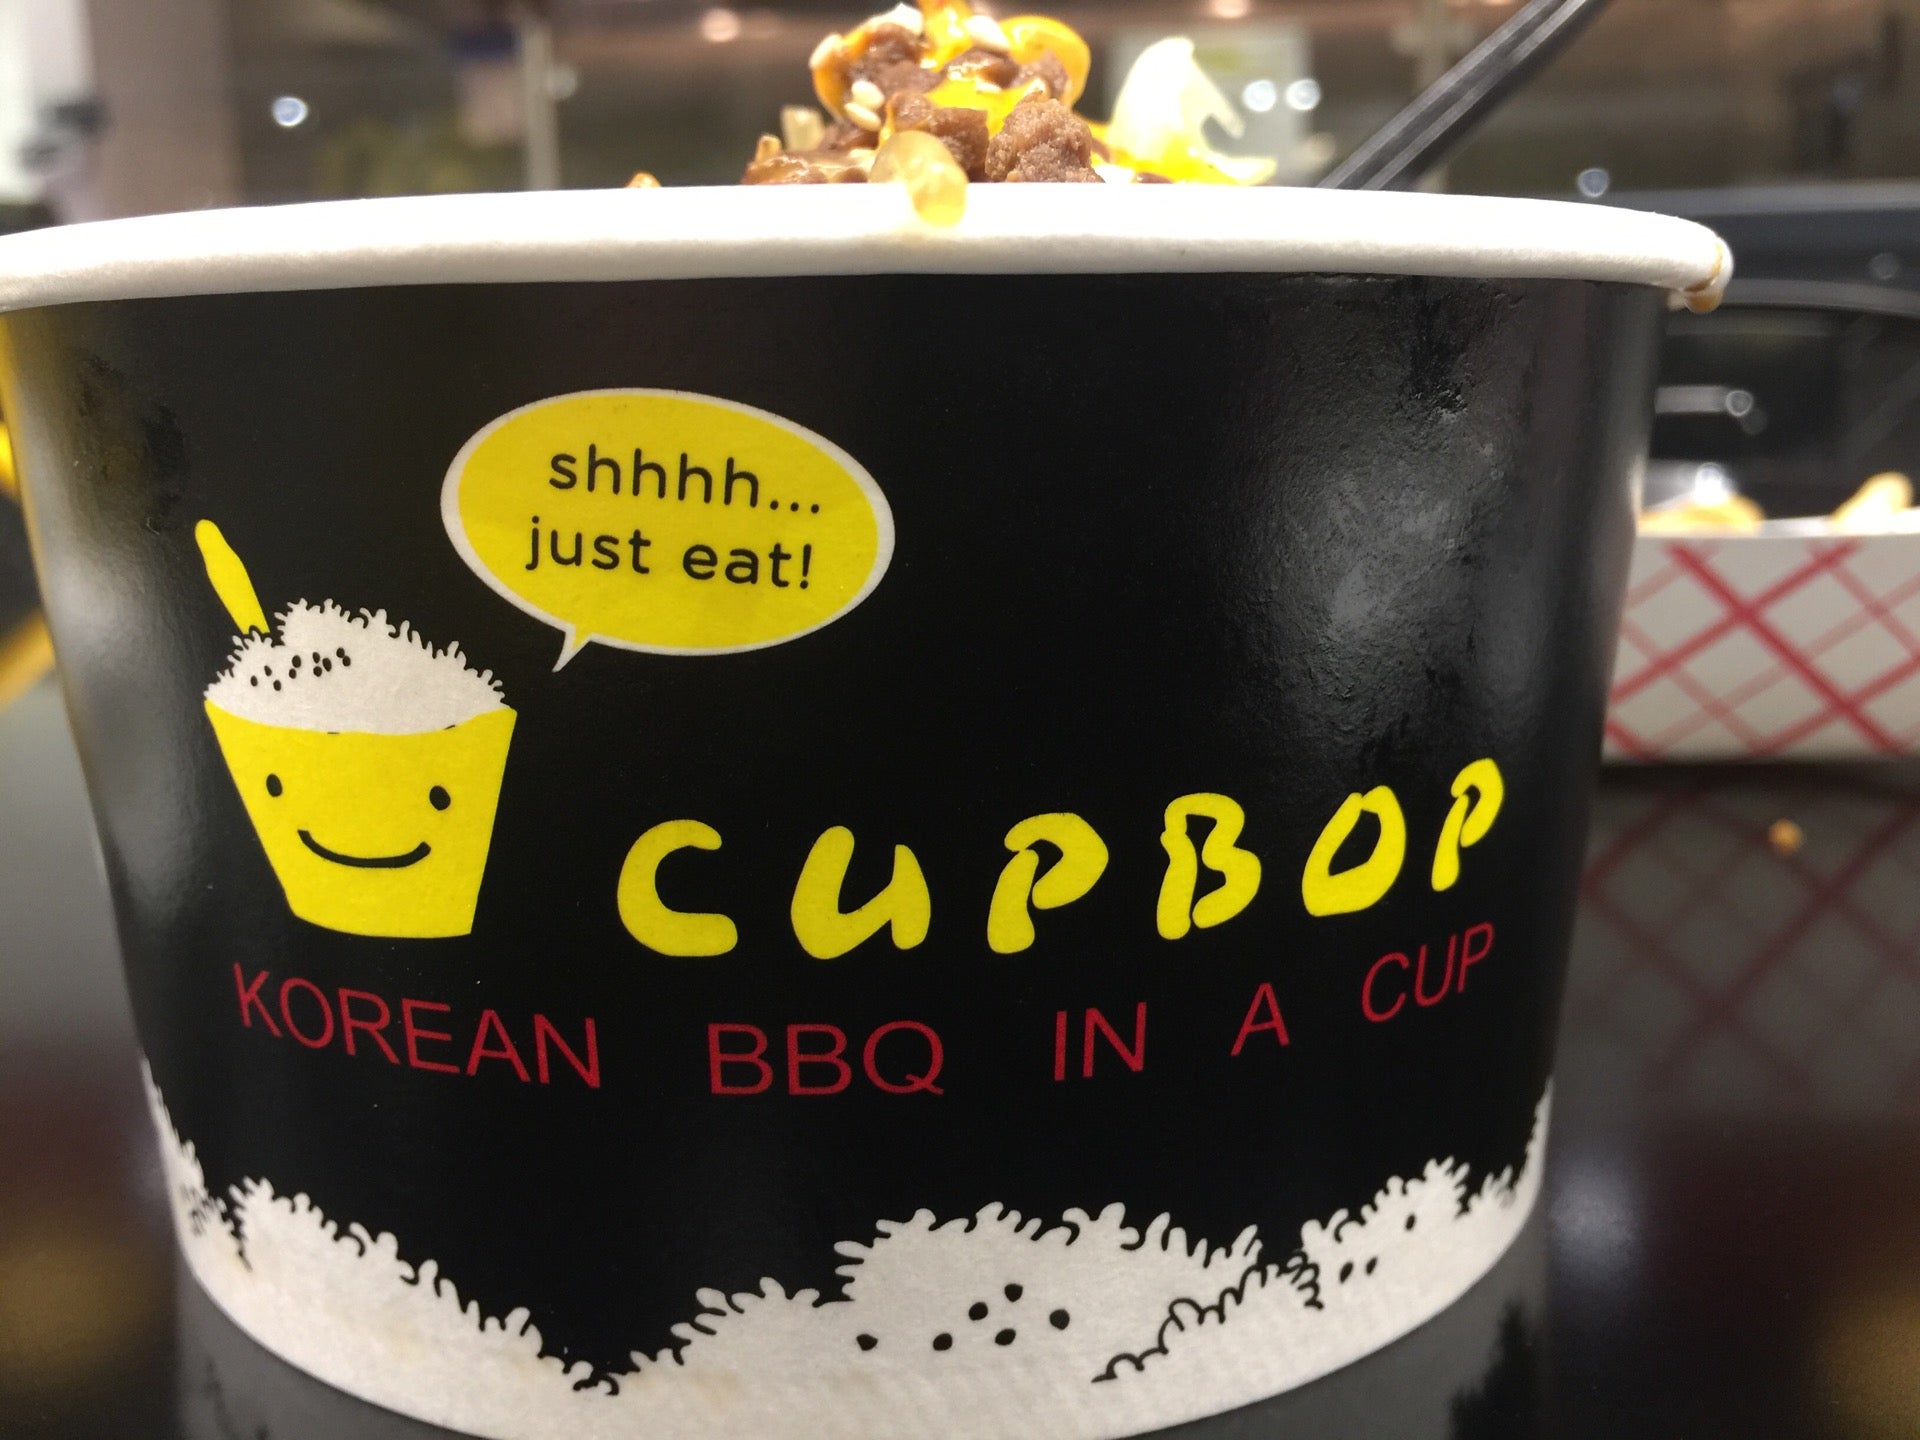 Cupbop - Korean BBQ